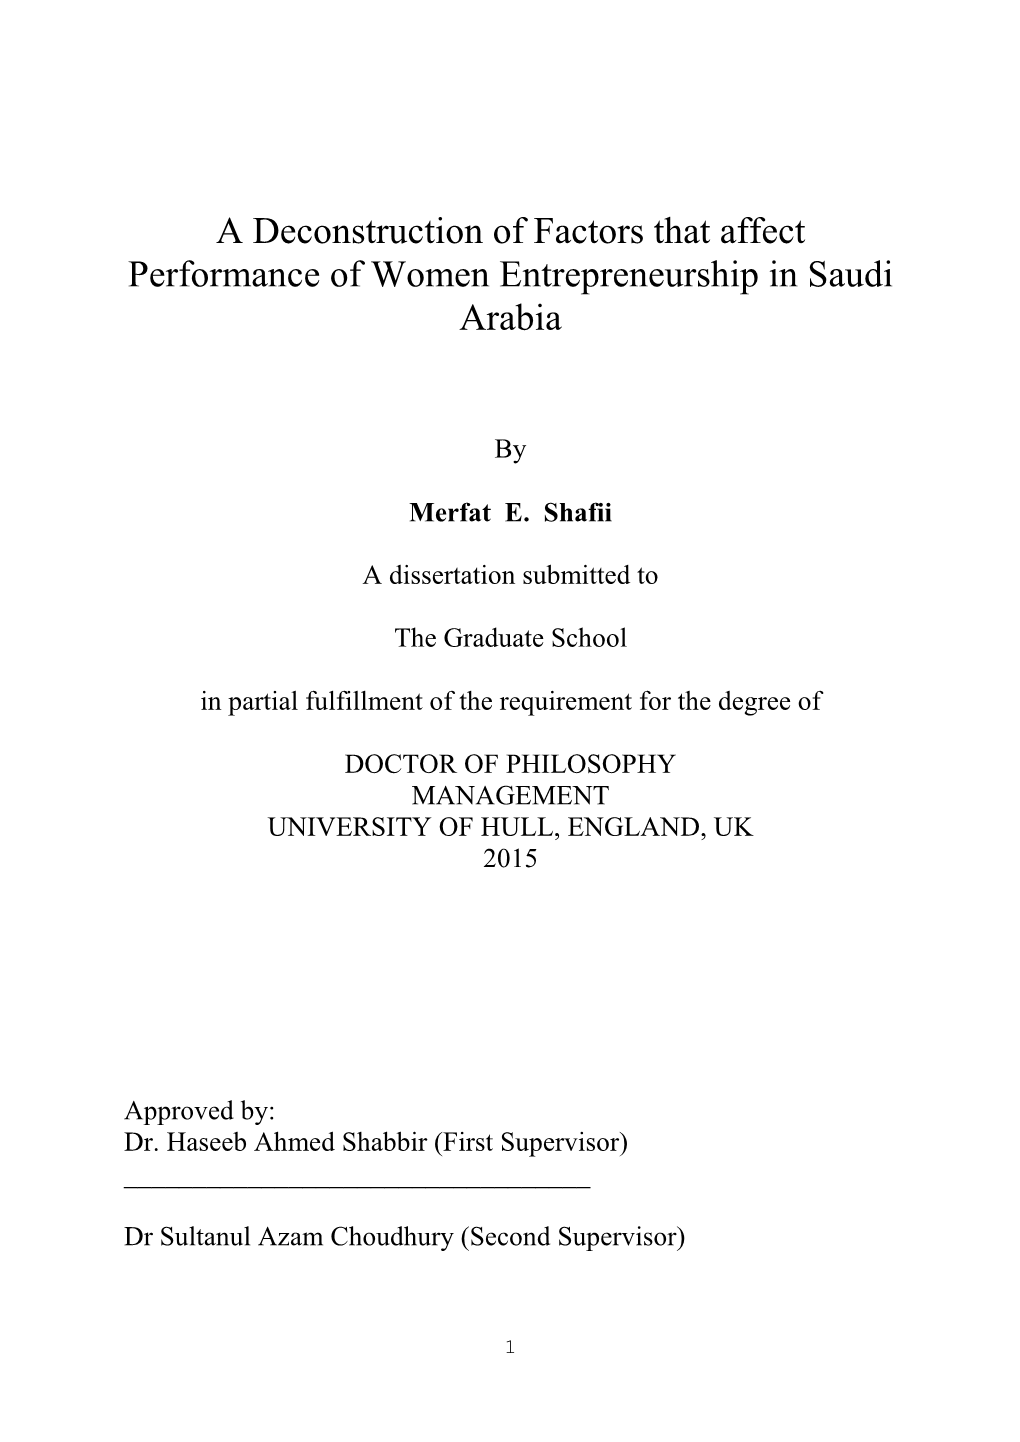 A Deconstruction of Factors That Affect Performance of Women Entrepreneurship in Saudi Arabia